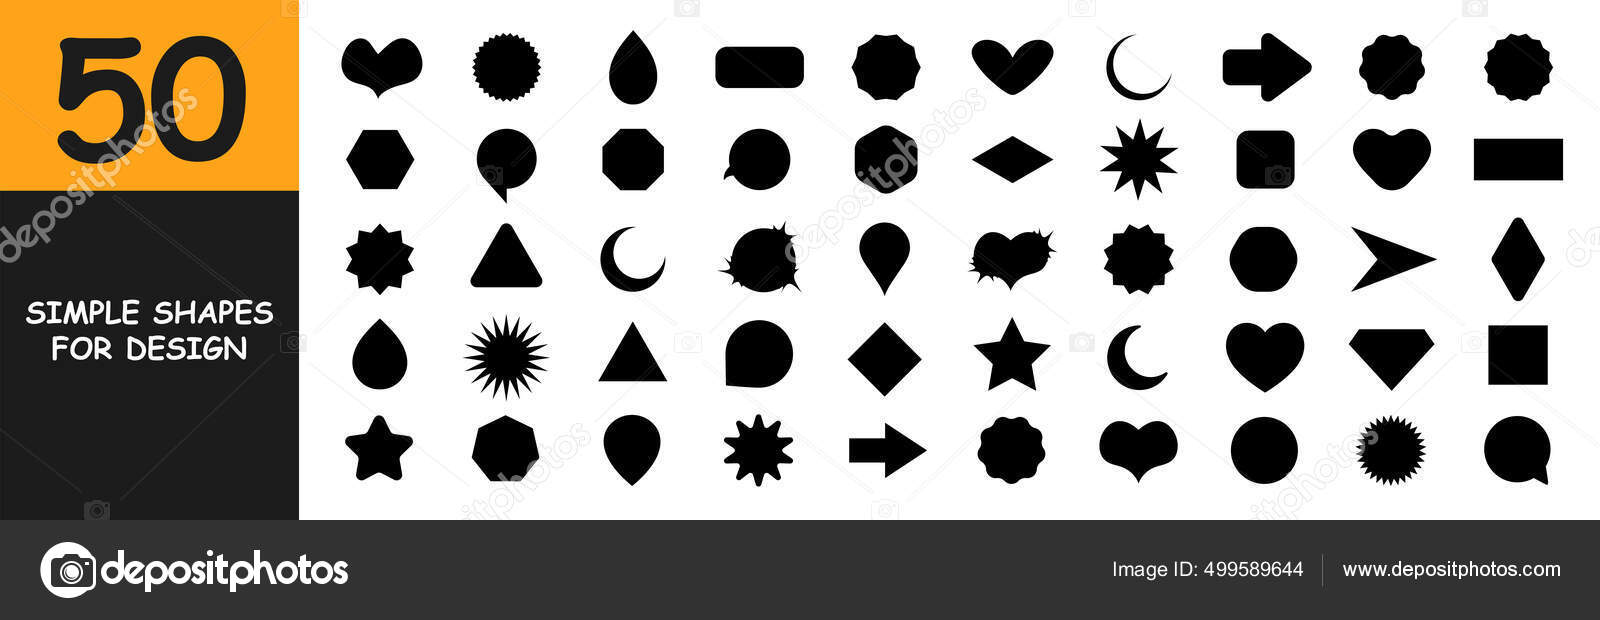 Basic Shapes Pattern Collection - Digital Download